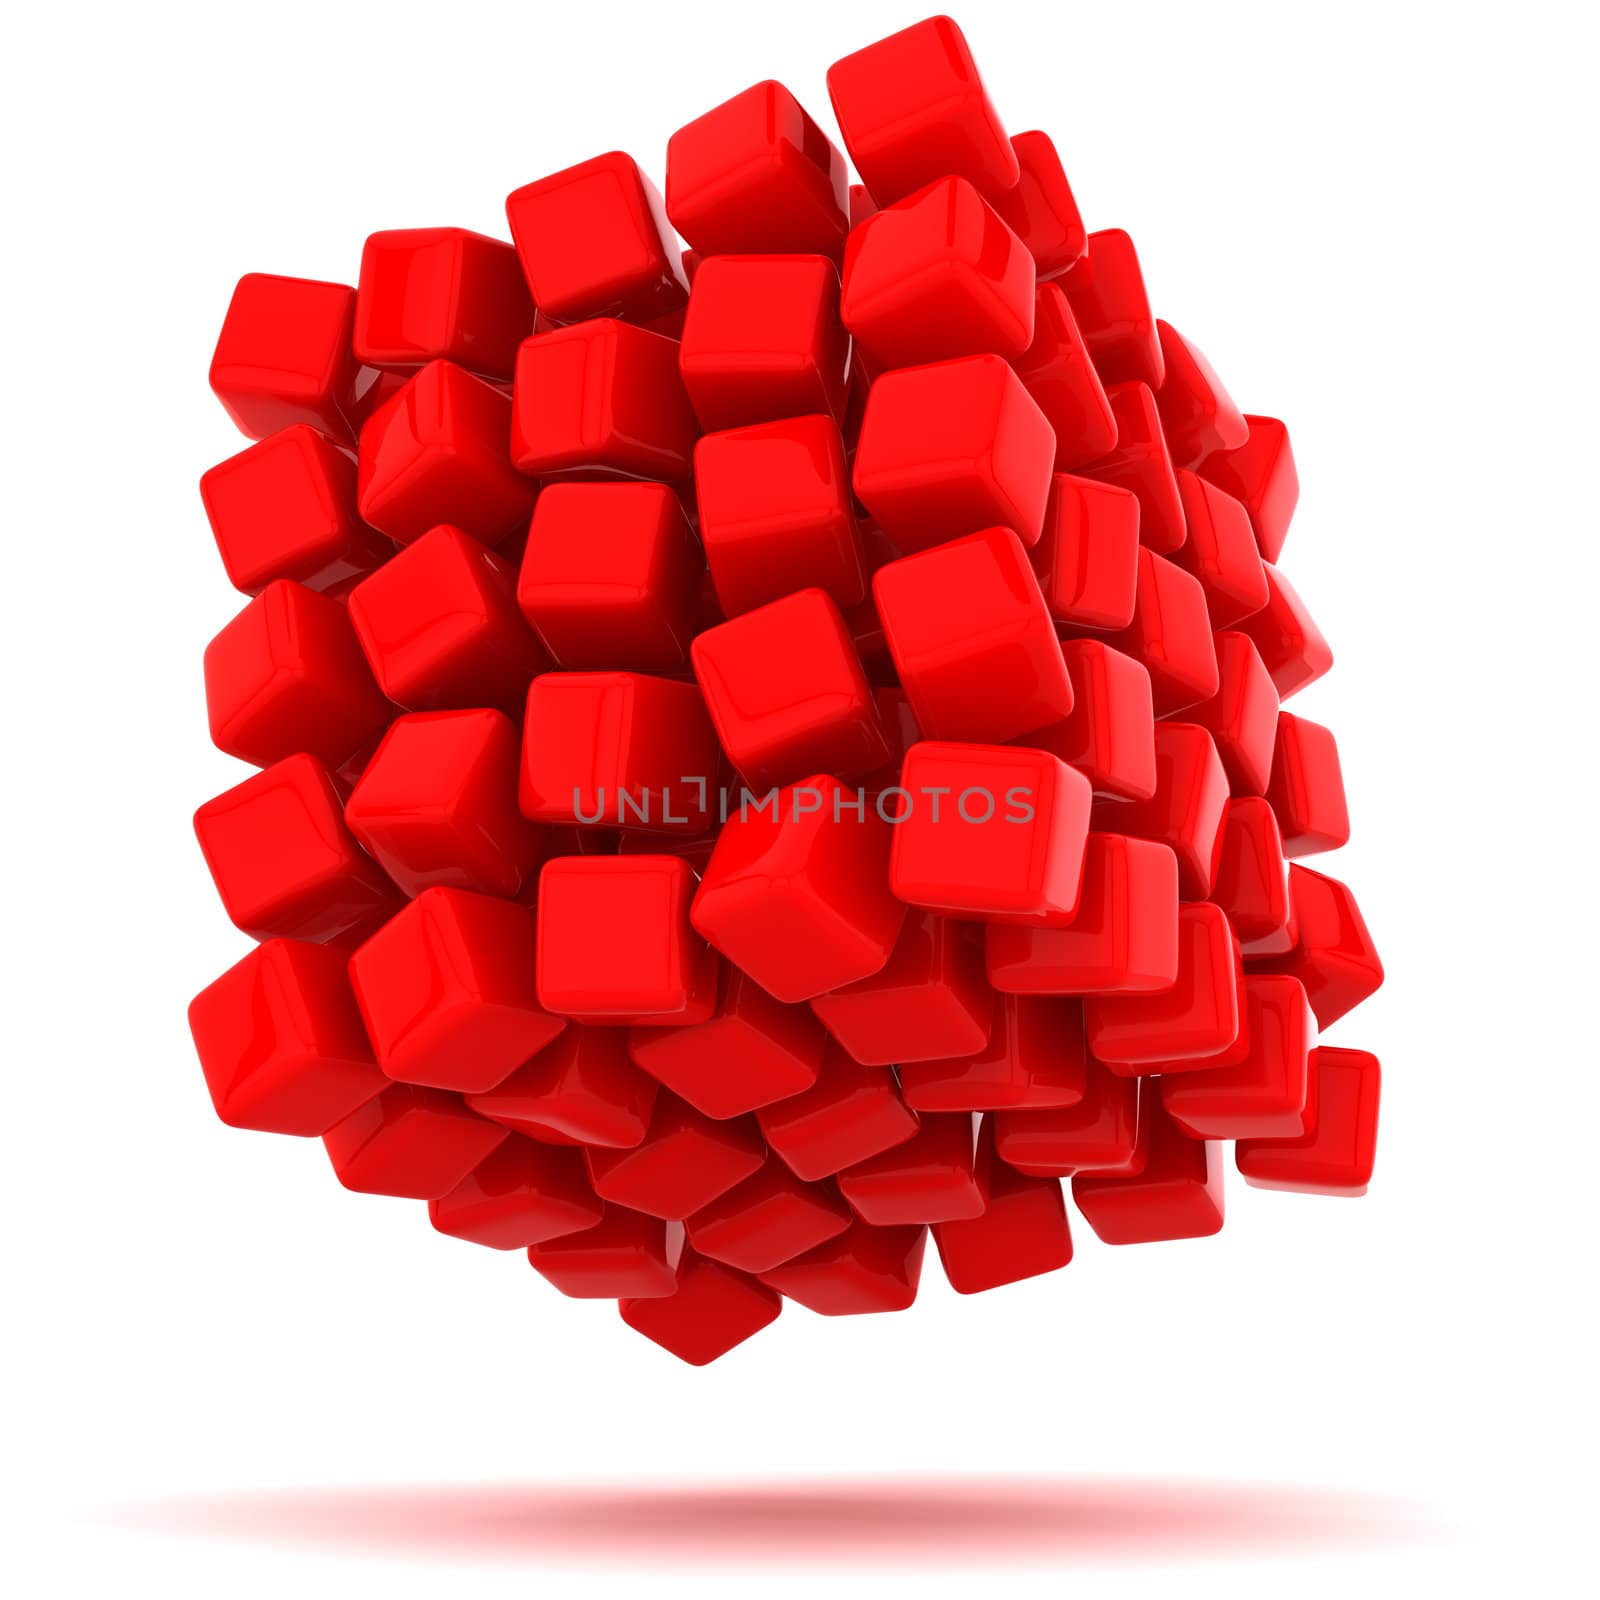 Big red cube falling apart